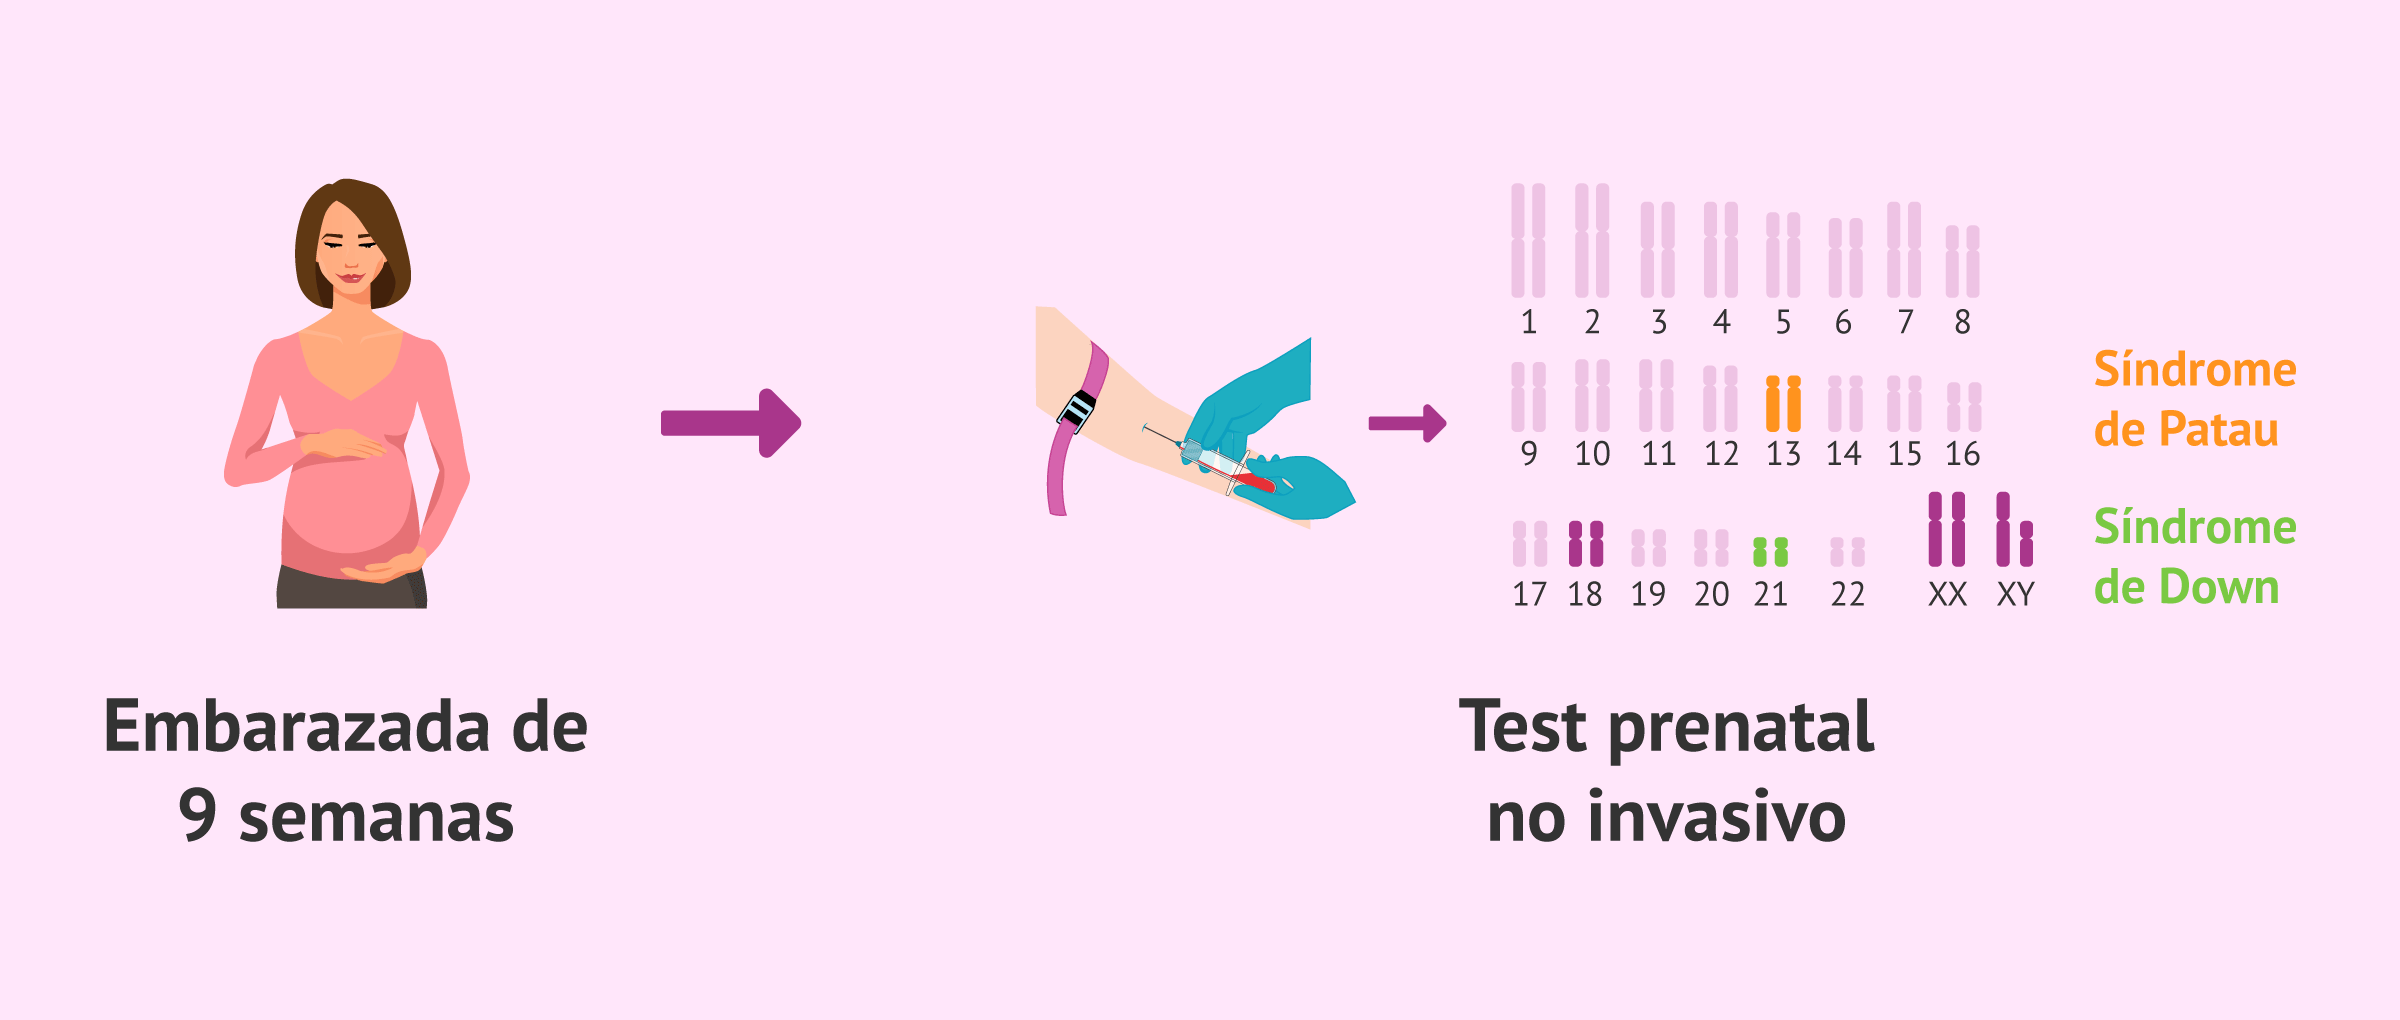 Test prenatal en sangre materna